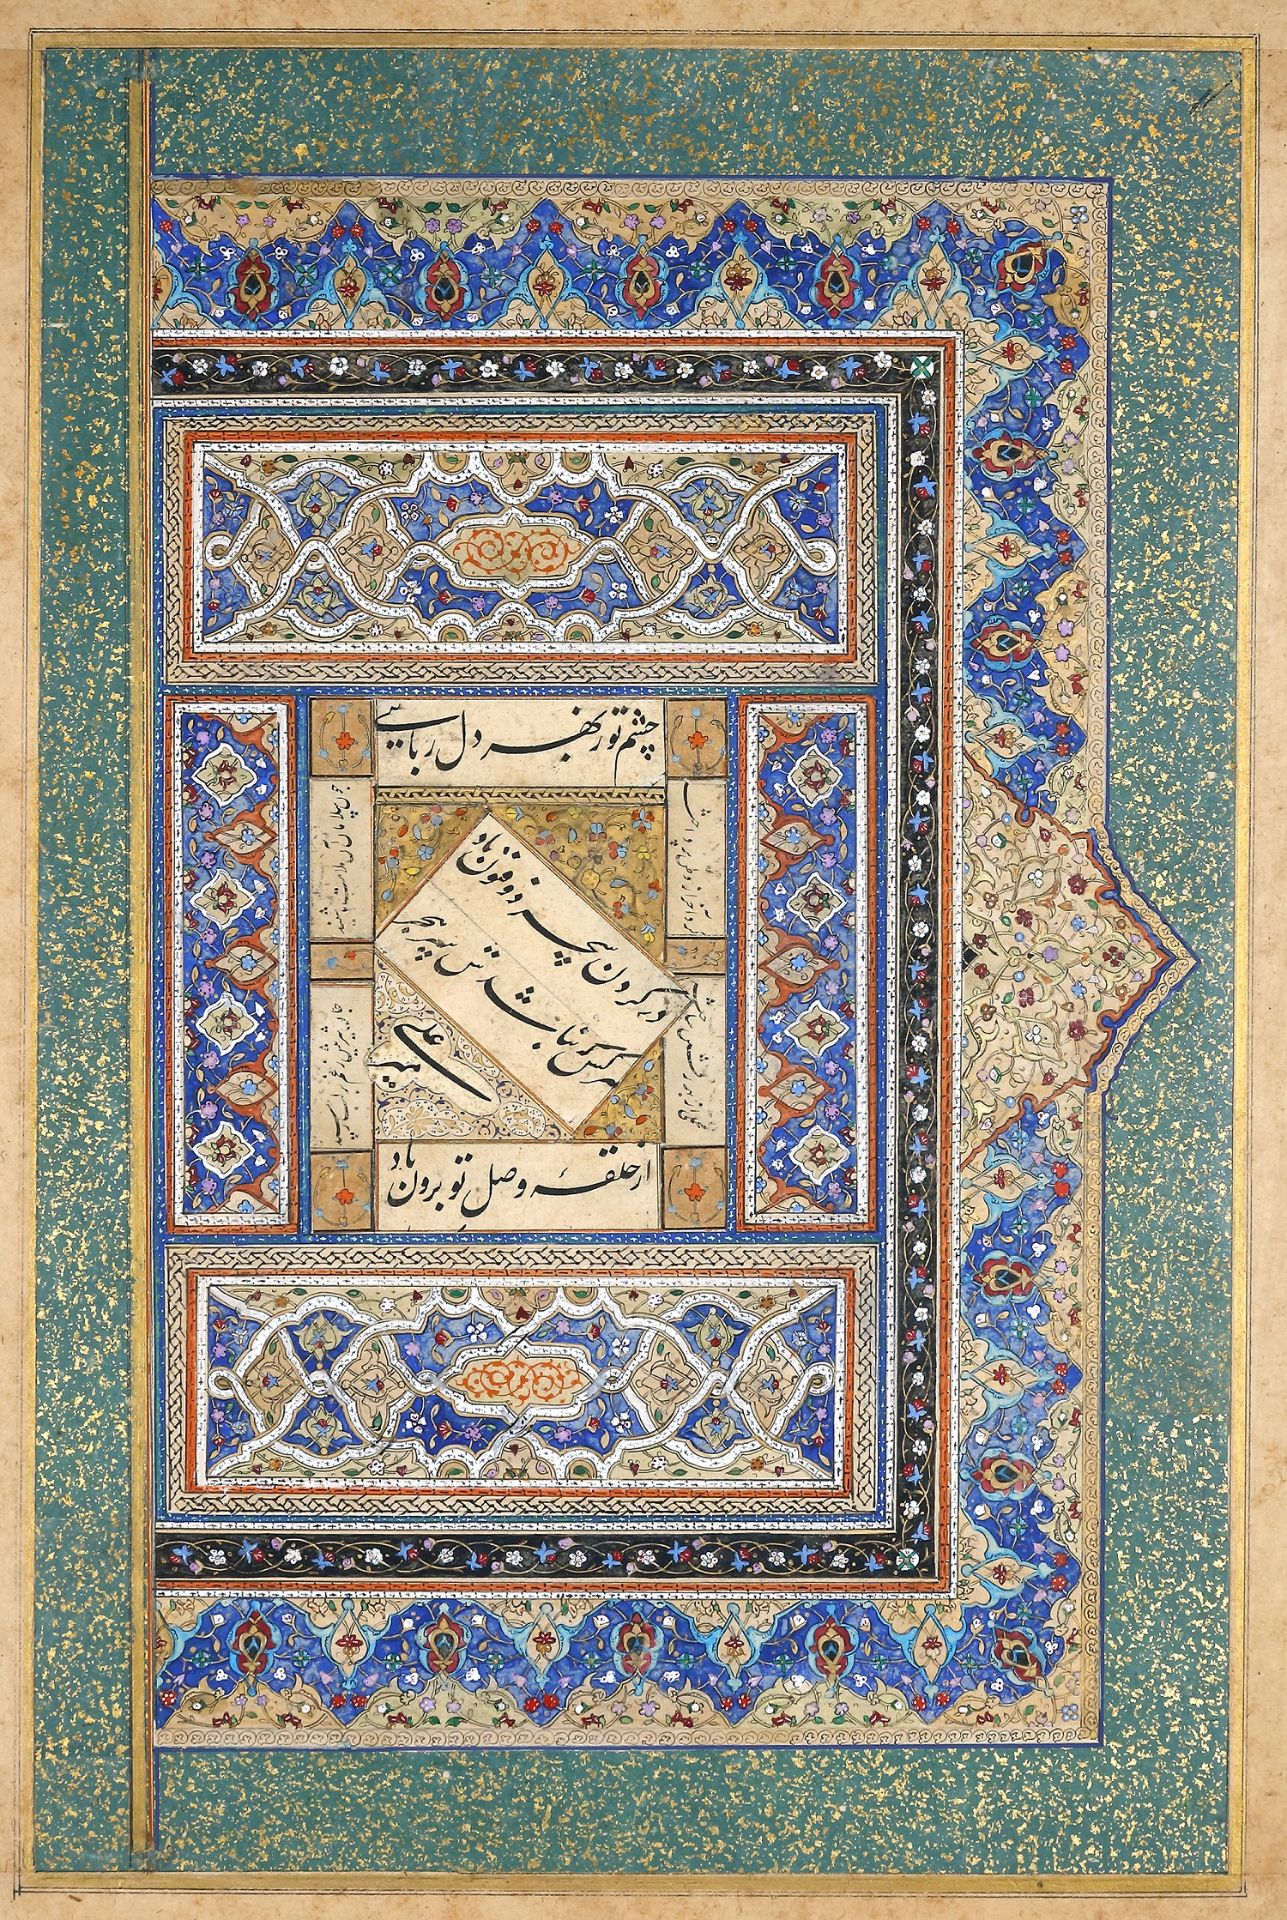 A CALLIGRAPHIC ALBUM PAGE BY MIR 'ALI AL-HARAWI (AL-KATIB AL-SULTANI), SAFAVID, PERSIA, 16TH CENTURY - Image 2 of 2